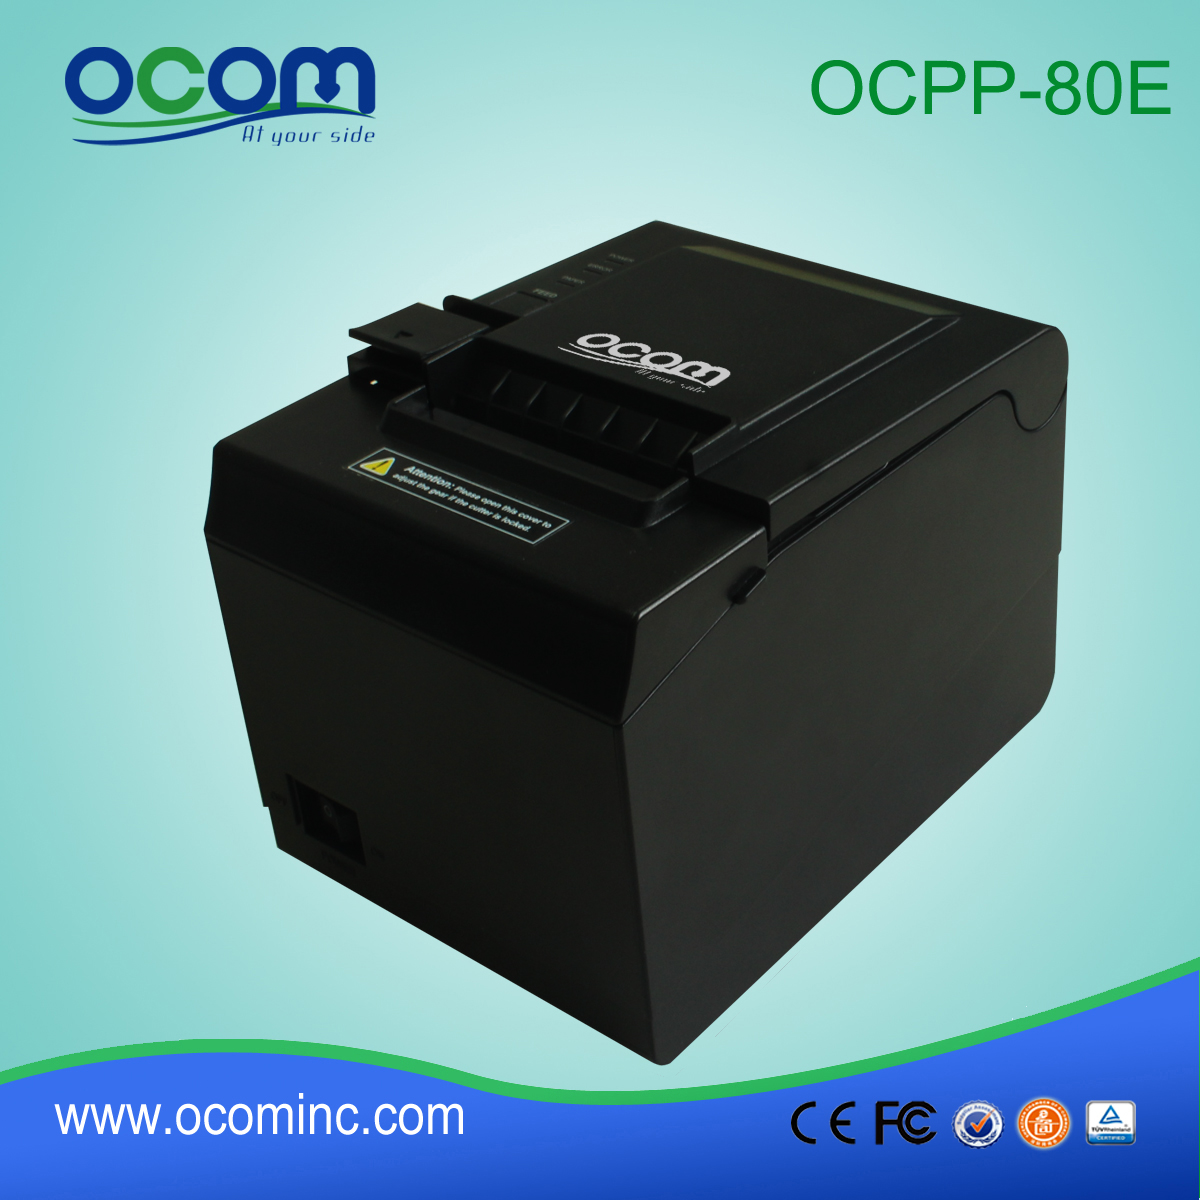 OCPP-80e 80 mm bus ticket imprimante Epson Barcode imprimante thermique